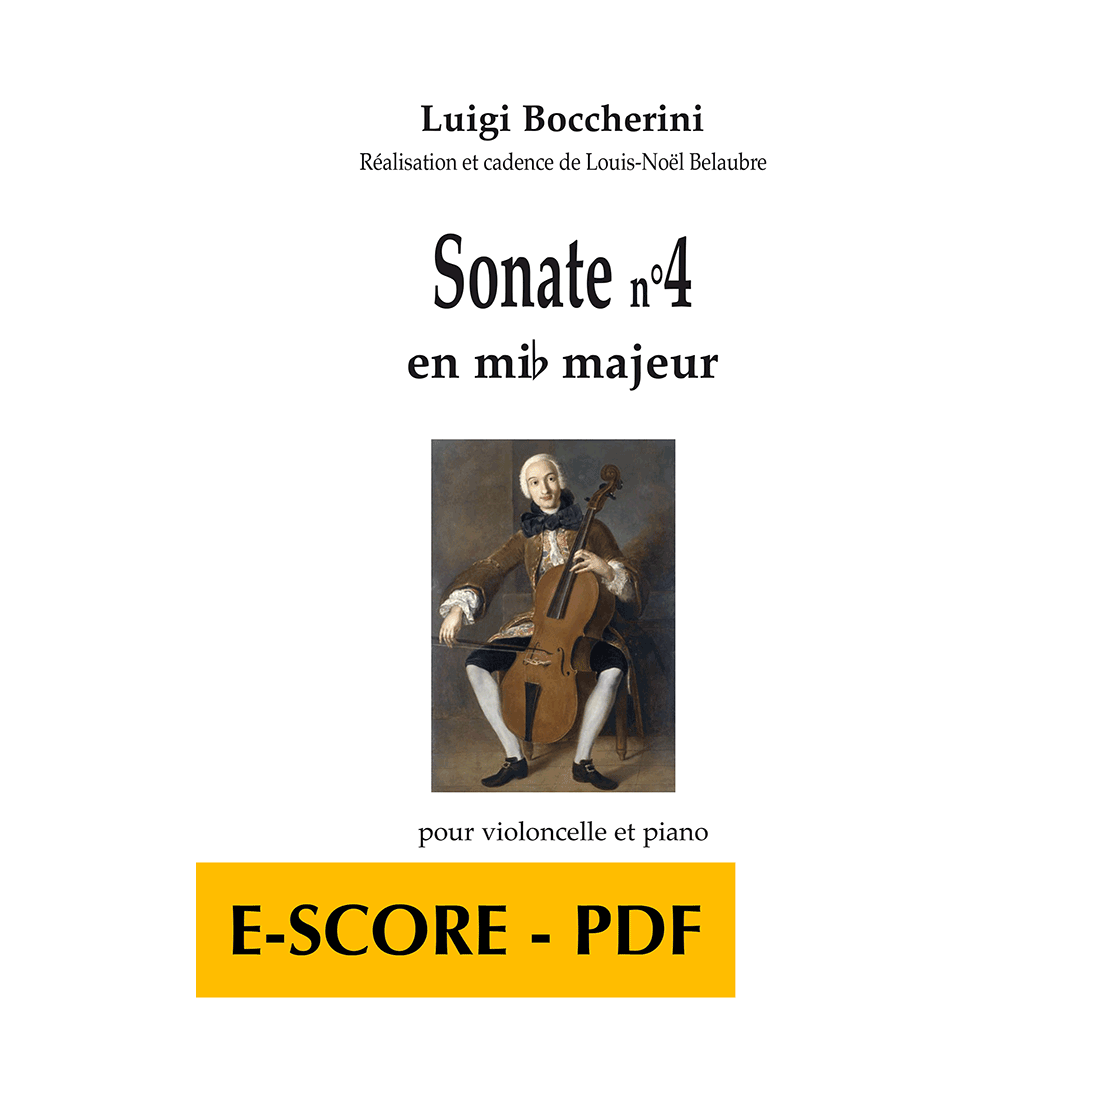 Sonate n°4 en mib majeur für Violoncello und Klavier - E-score PDF